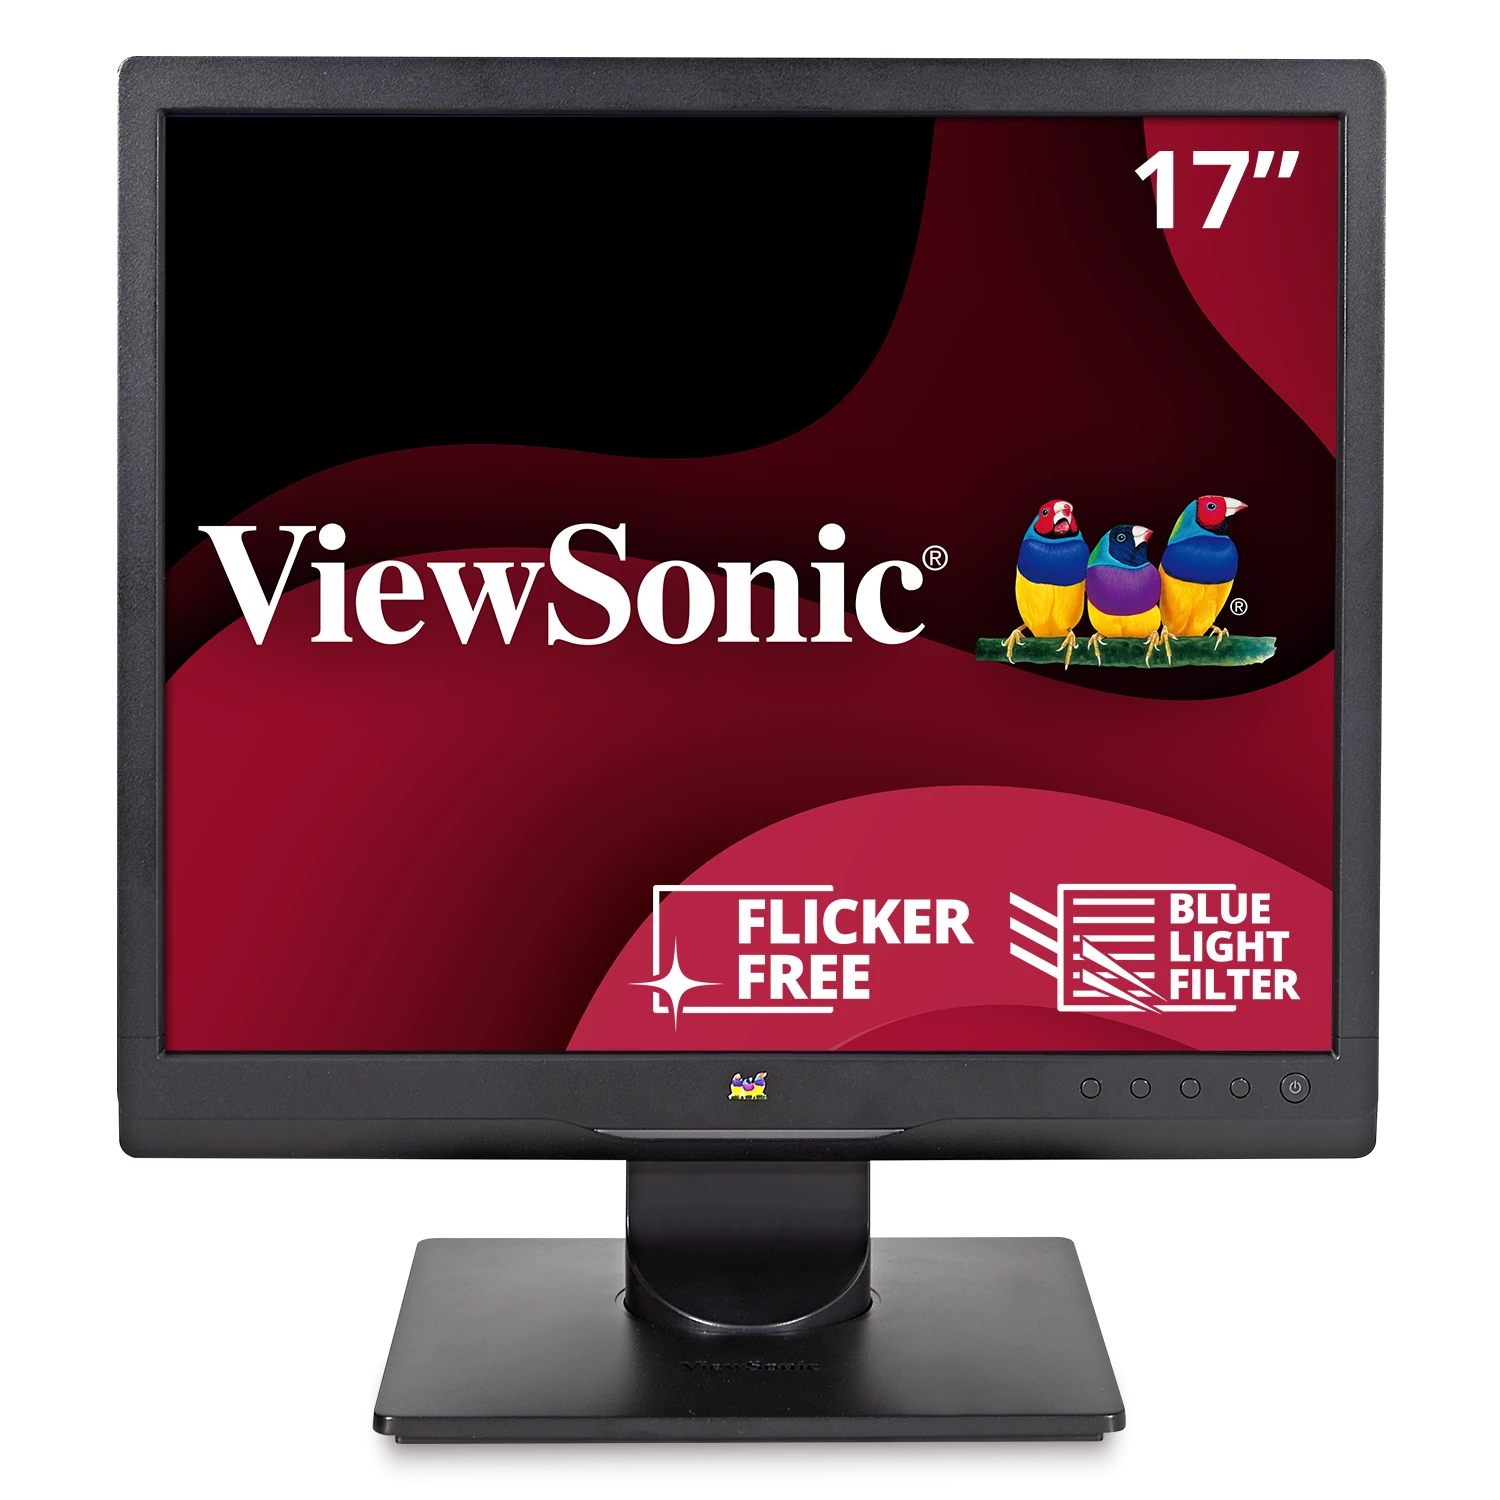 Viewsonic VA708A | 17" 1080P 60Hz TN Monitor